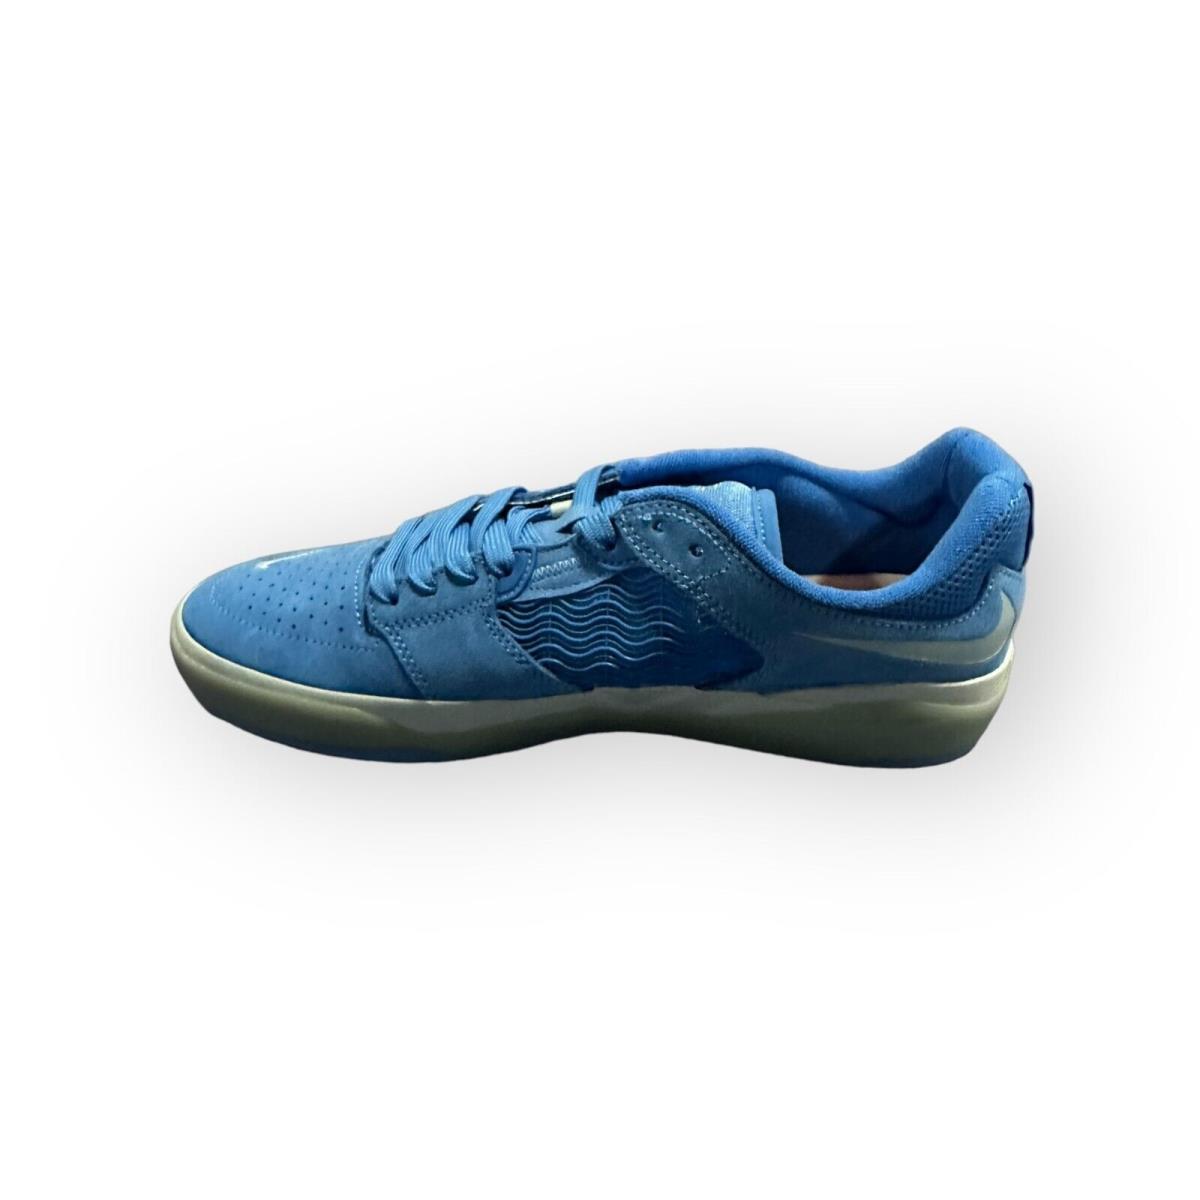 Nike SB Ishod Wair Pacific Blue Skateboarding Shoes Mens Size 9.5 DC7232-401 - Blue